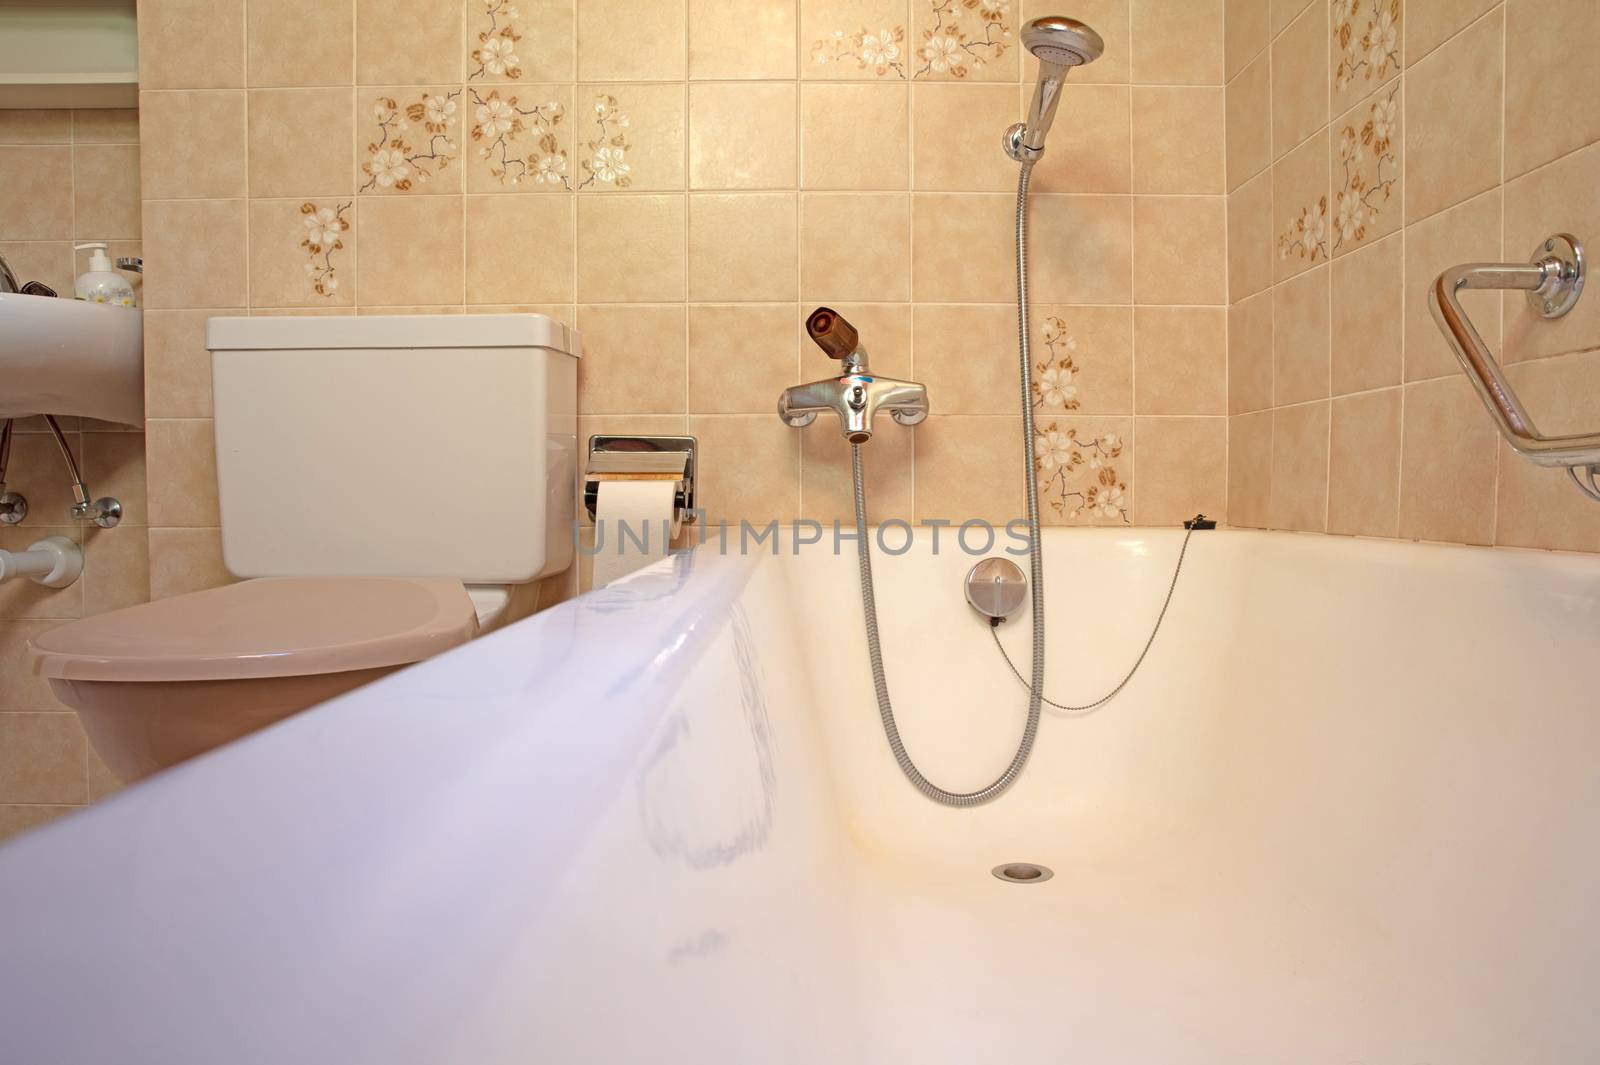 Old bathroom, brown tiled interior with bathtub, assistive handle